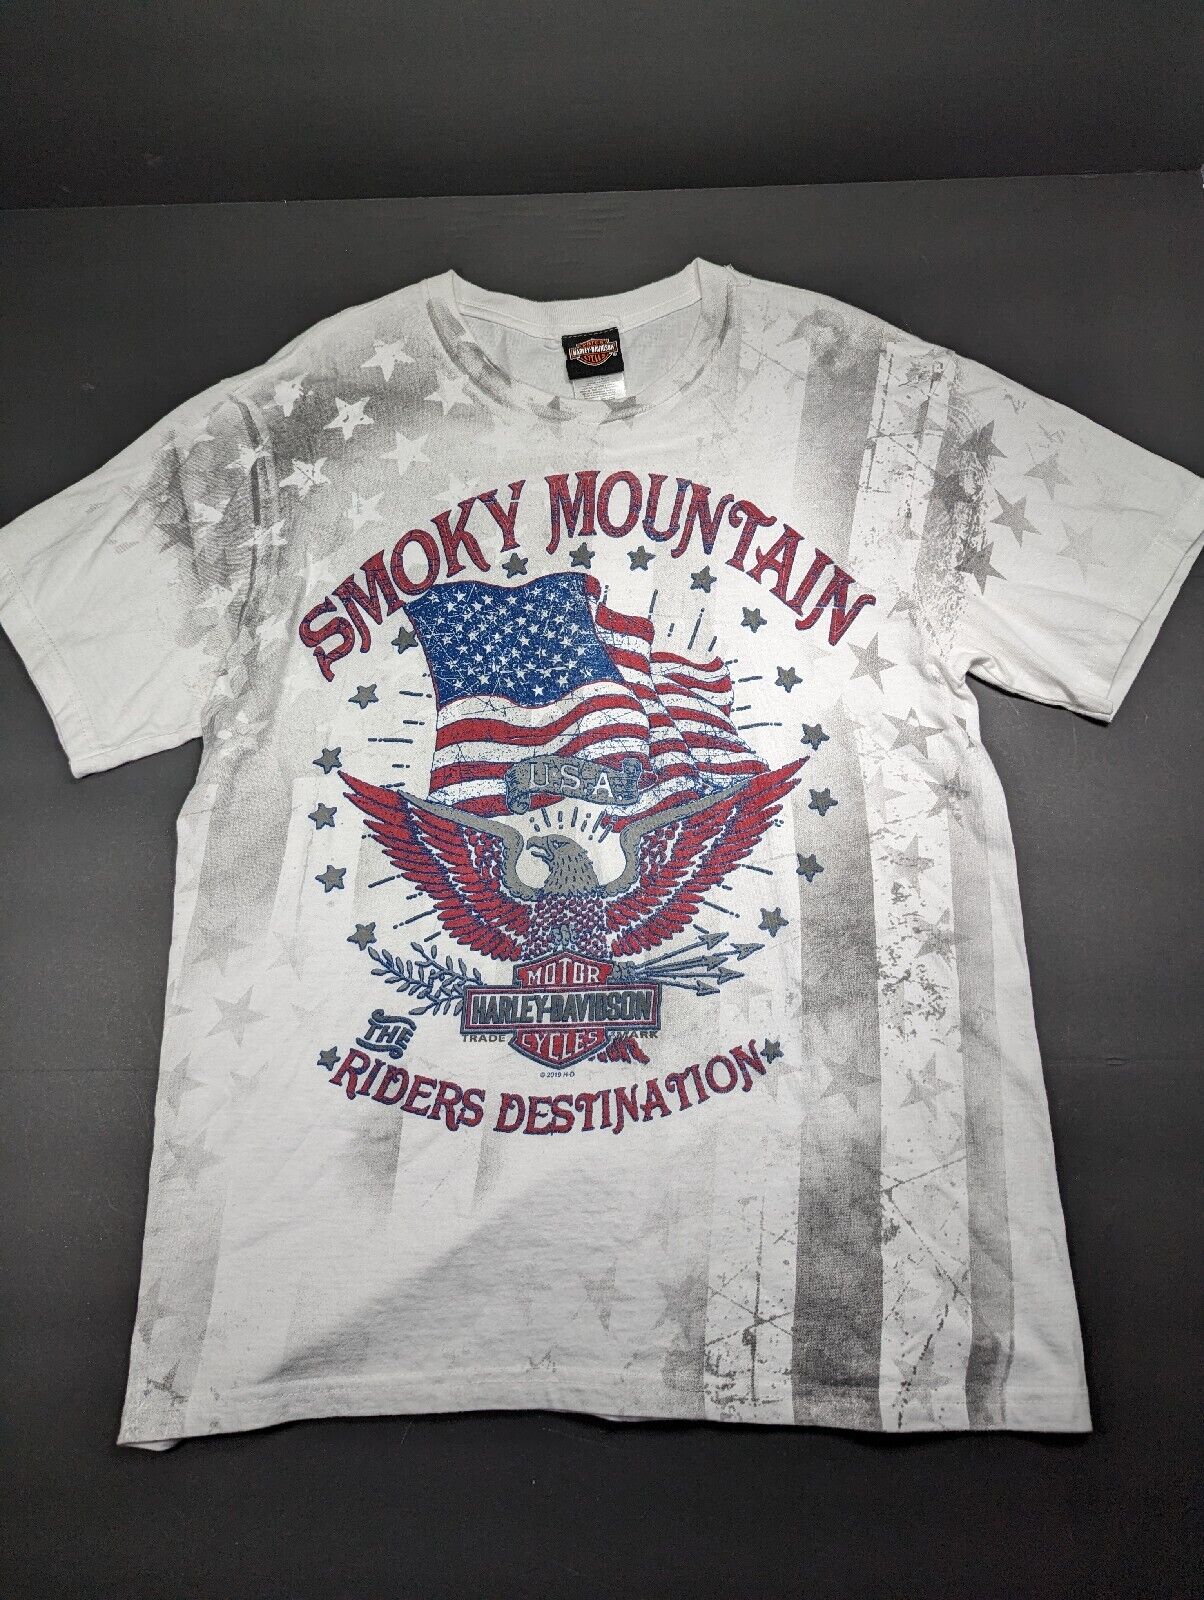 Harley Davidson 2019 Smoky Mountains Rider Destination Shirt Size Large